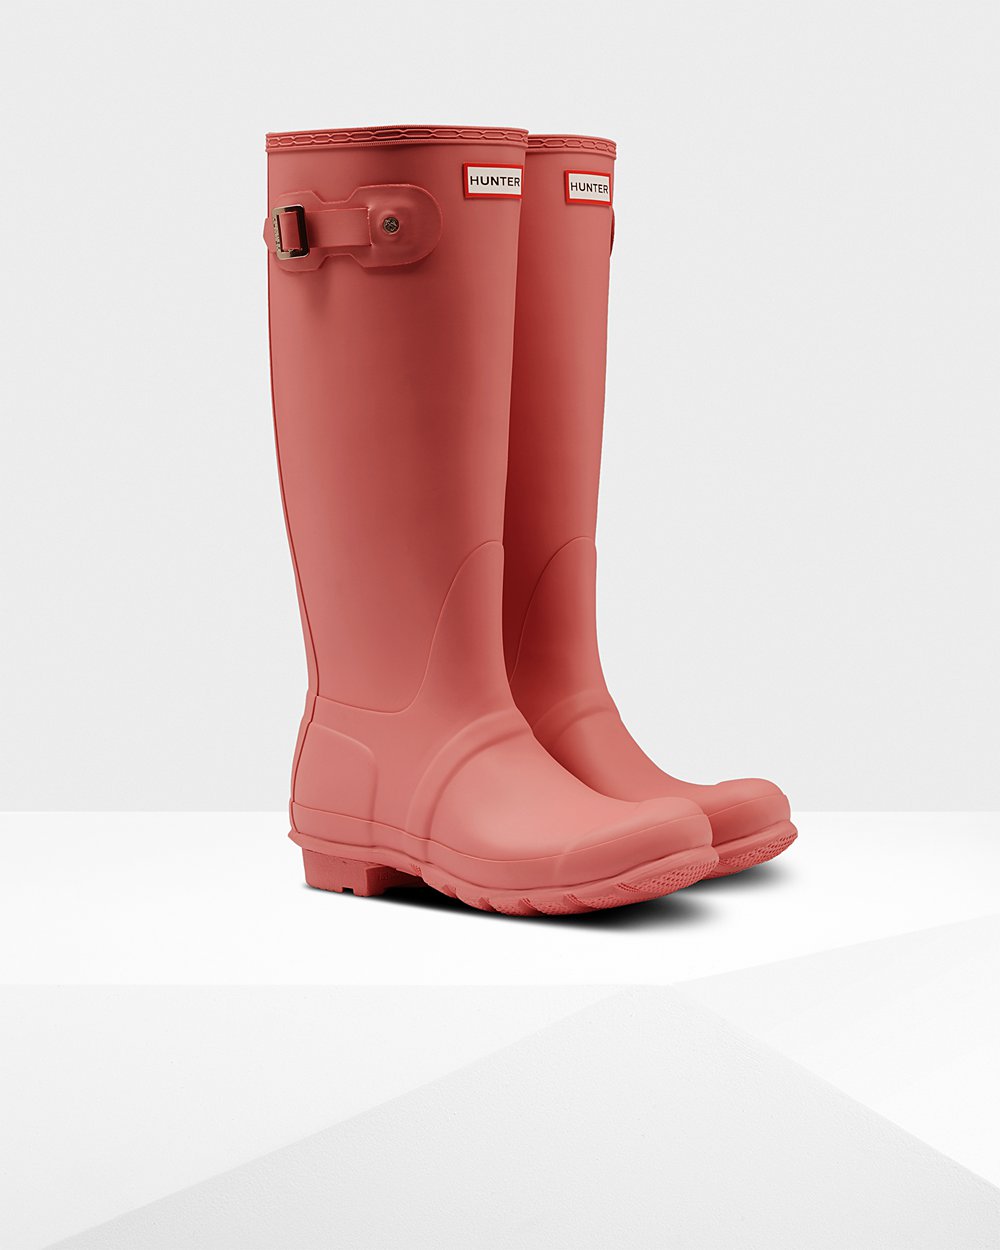 Womens Tall Rain Boots - Hunter Original (92RLXNEHK) - Pink